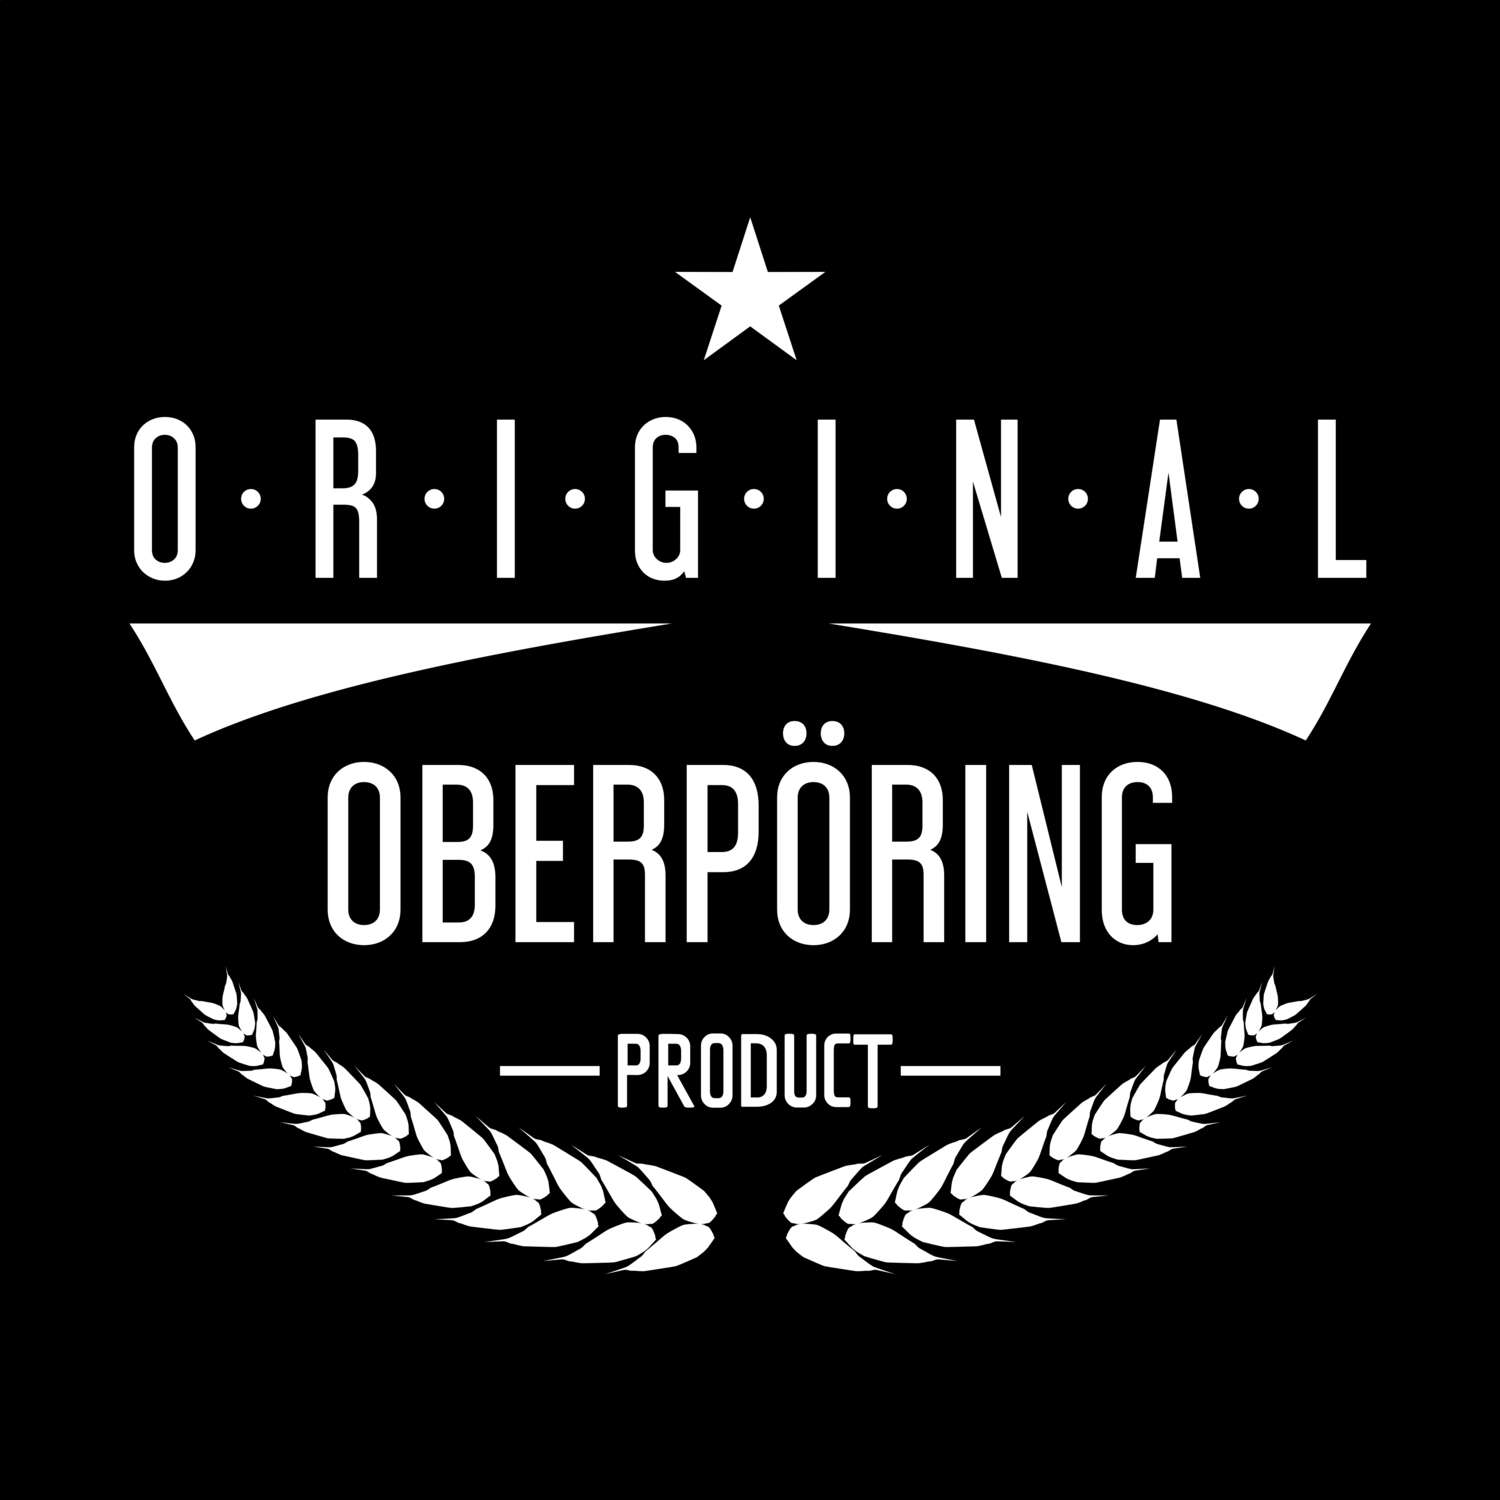 Oberpöring T-Shirt »Original Product«